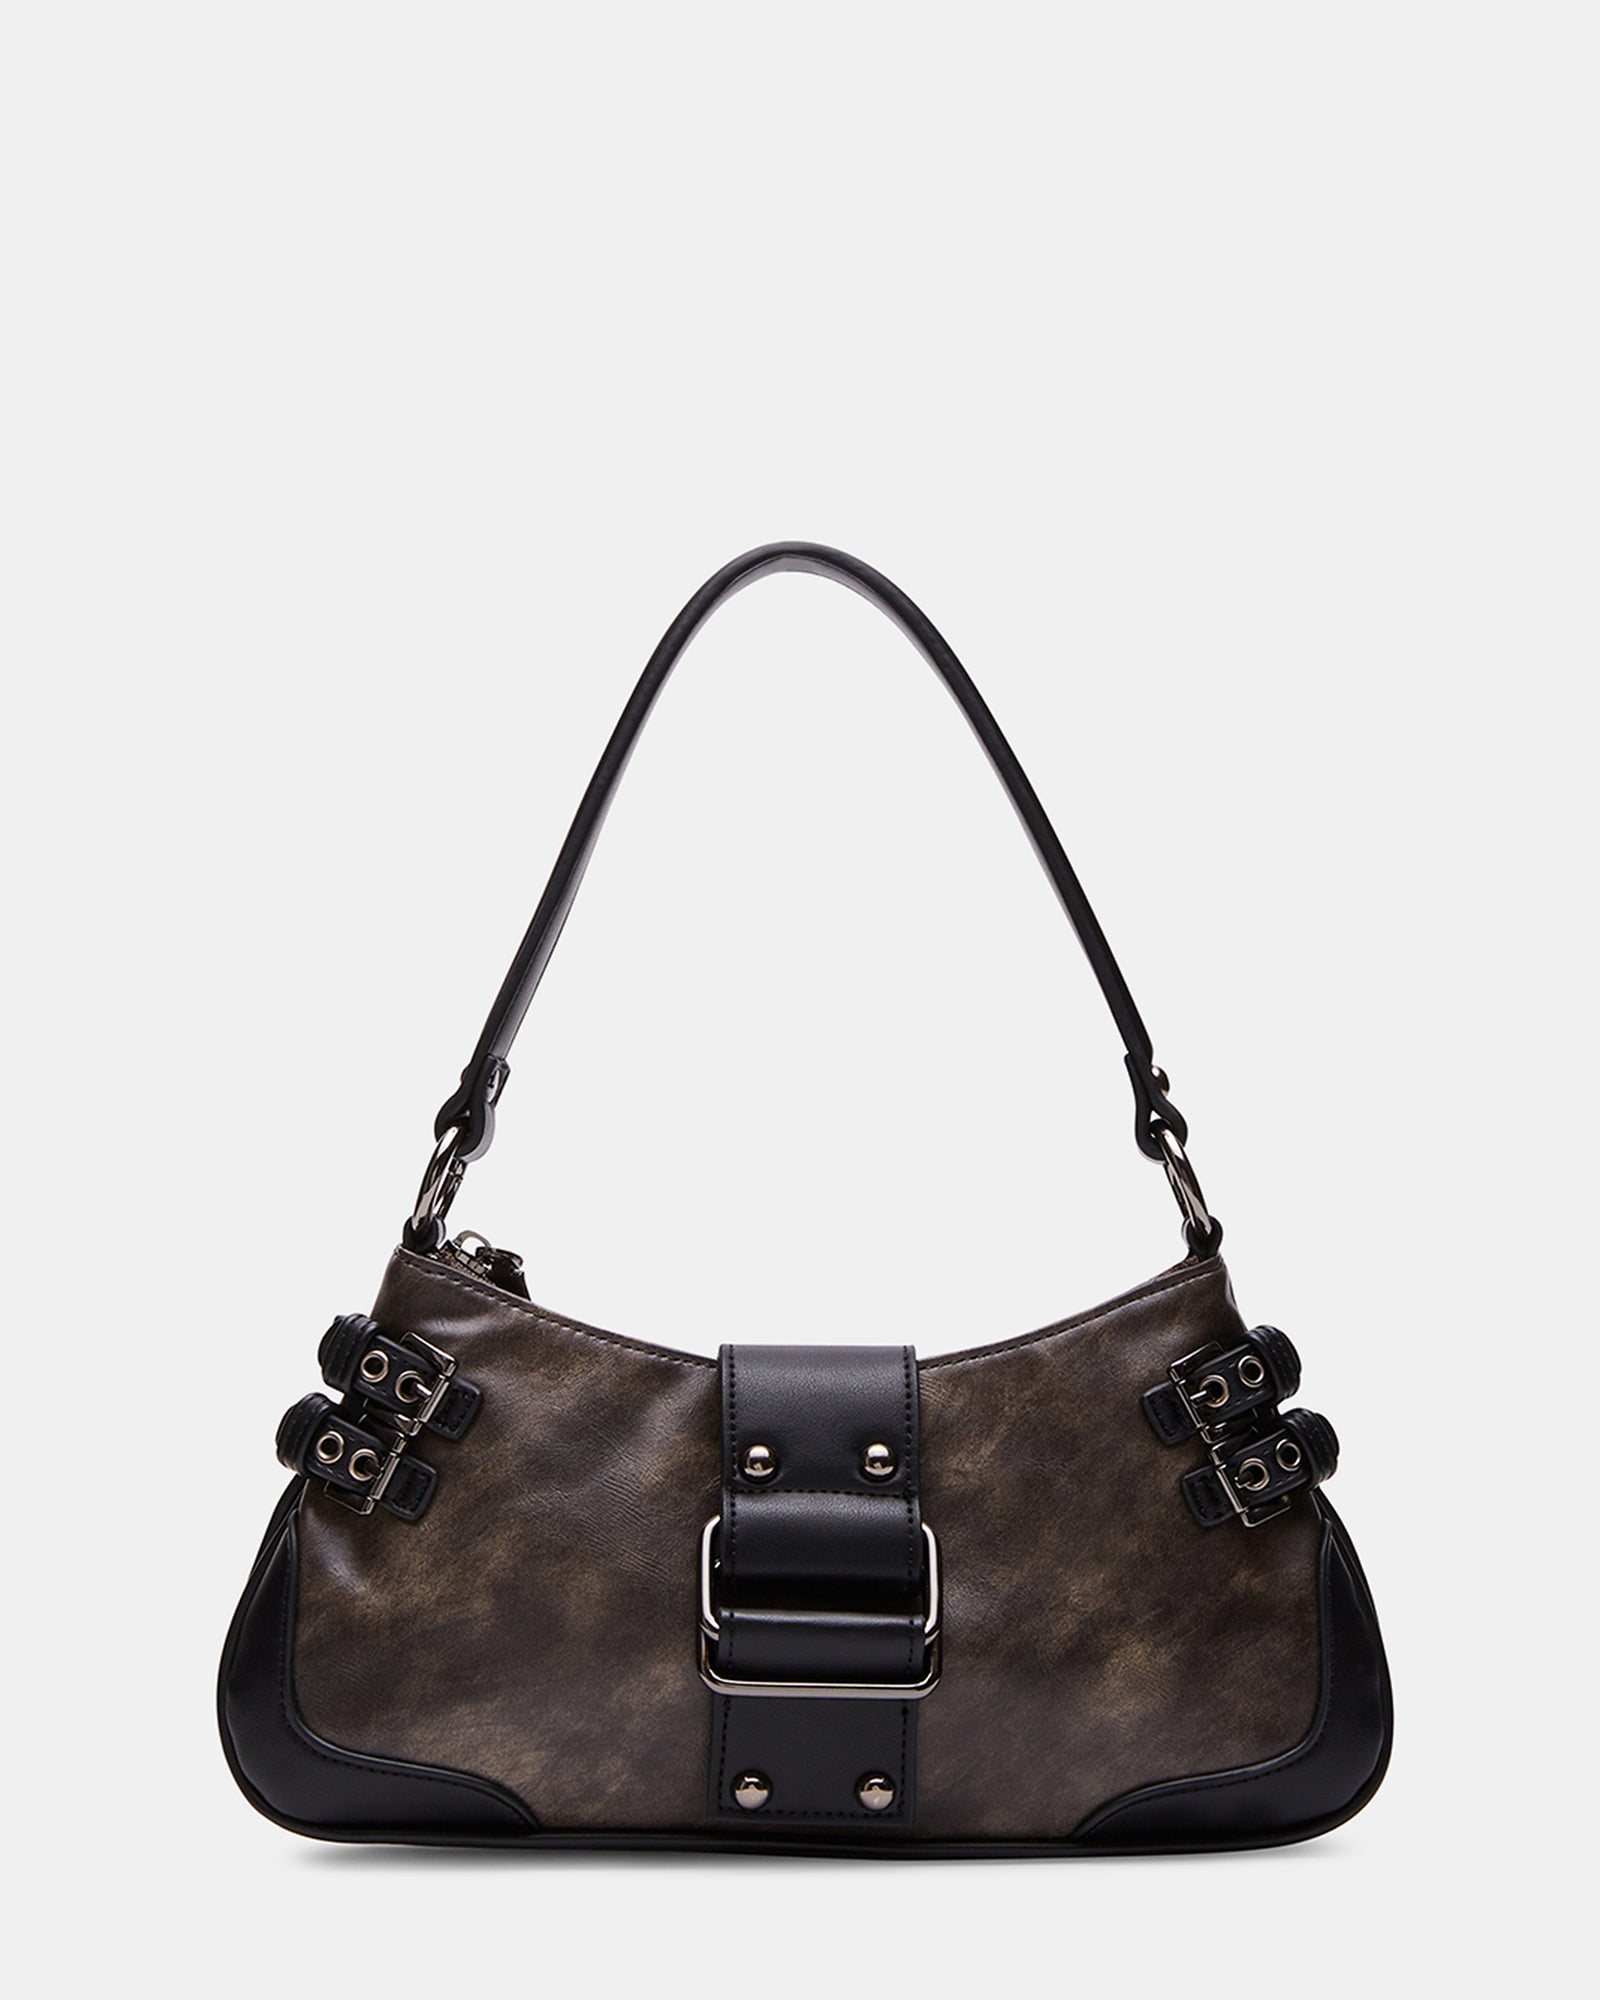 Guess Women Handbag New! Original Price Is $108.